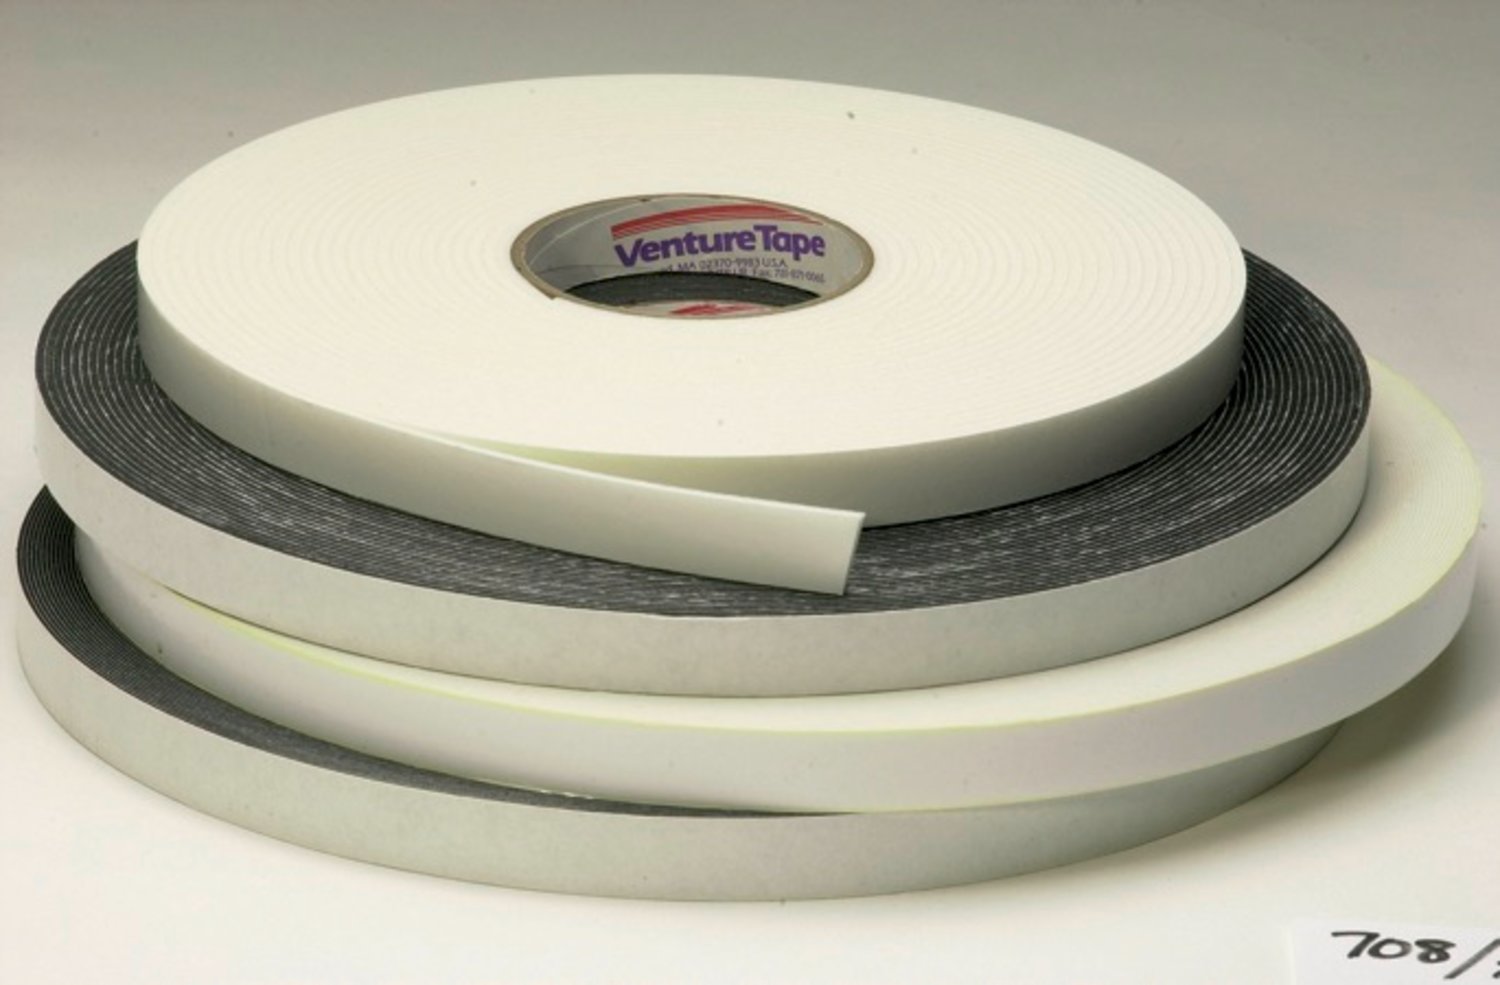 7010337465 - 3M Venture Tape Double Sided Polyethylene Foam Glazing Tape VG716,
White, 1/2 in x 150 ft, 62 mil, 40 rolls per case